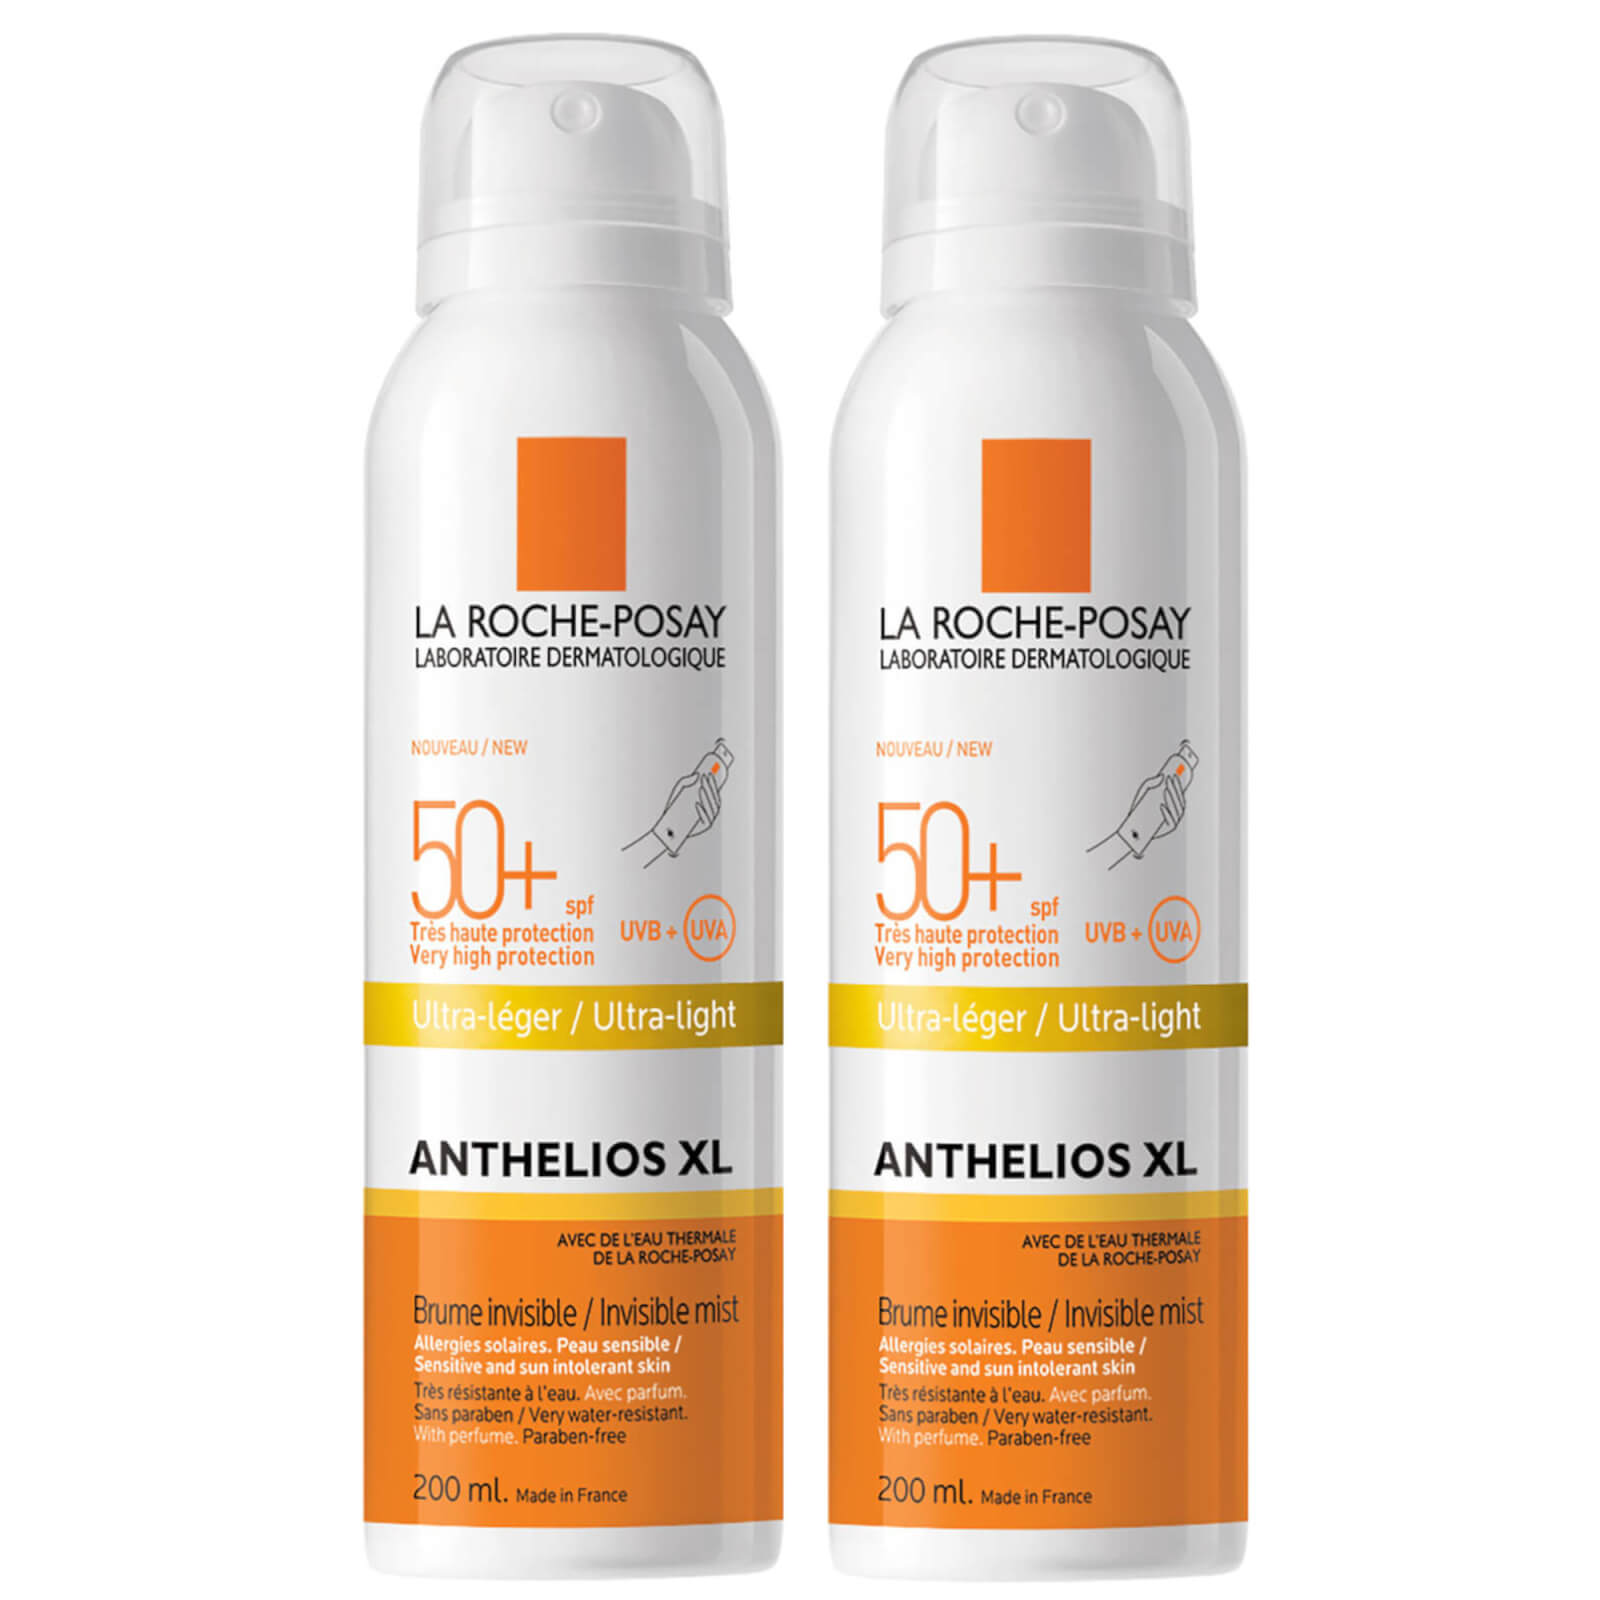 La Roche-Posay Anthelios Ultra-Light SPF50+ Sun Protection Spray 200ml Duo lookfantastic.com imagine